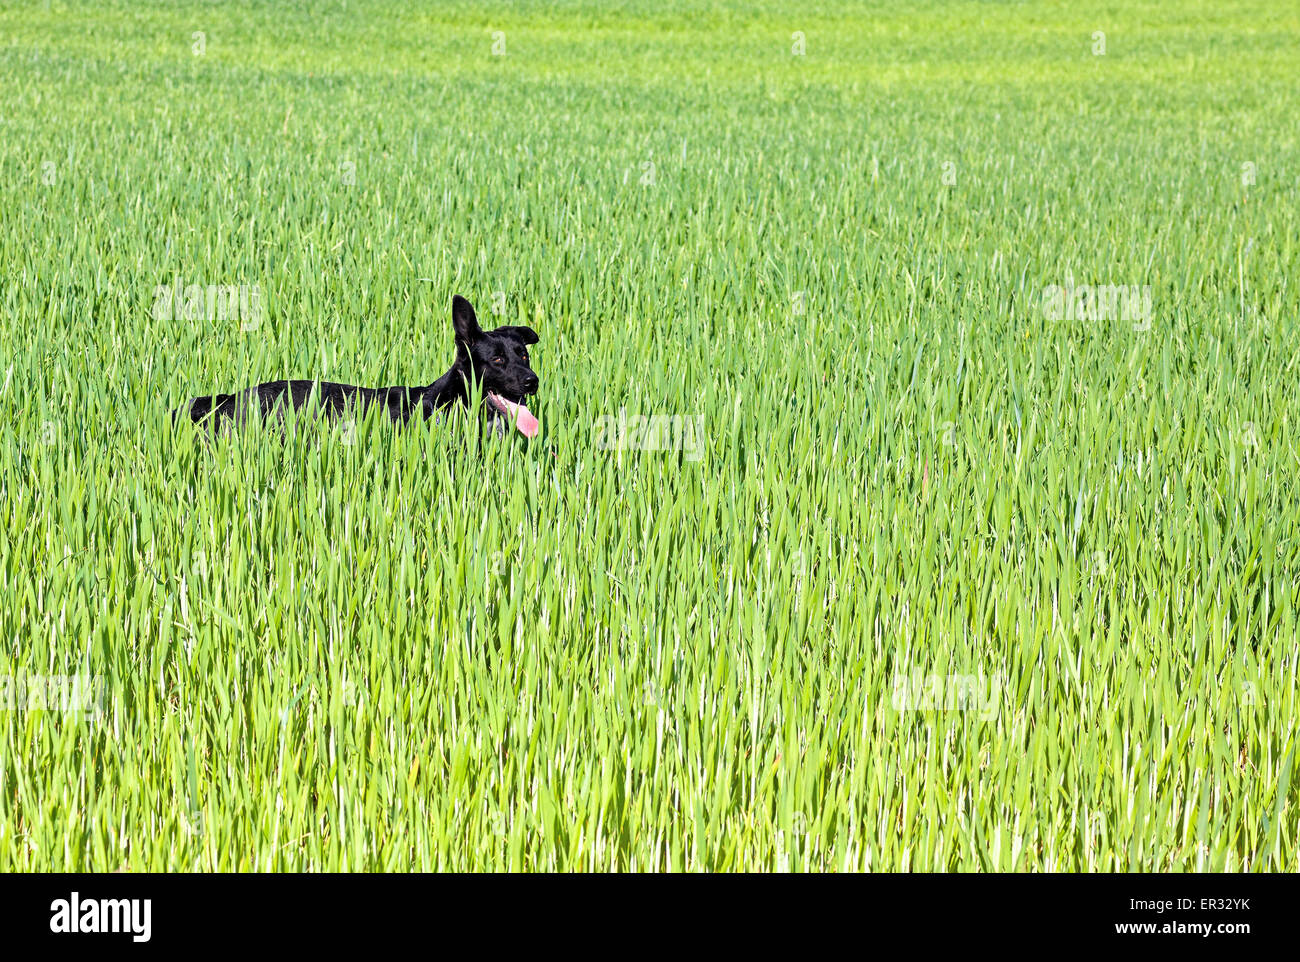 Black dog in a green crop field. Stock Photo